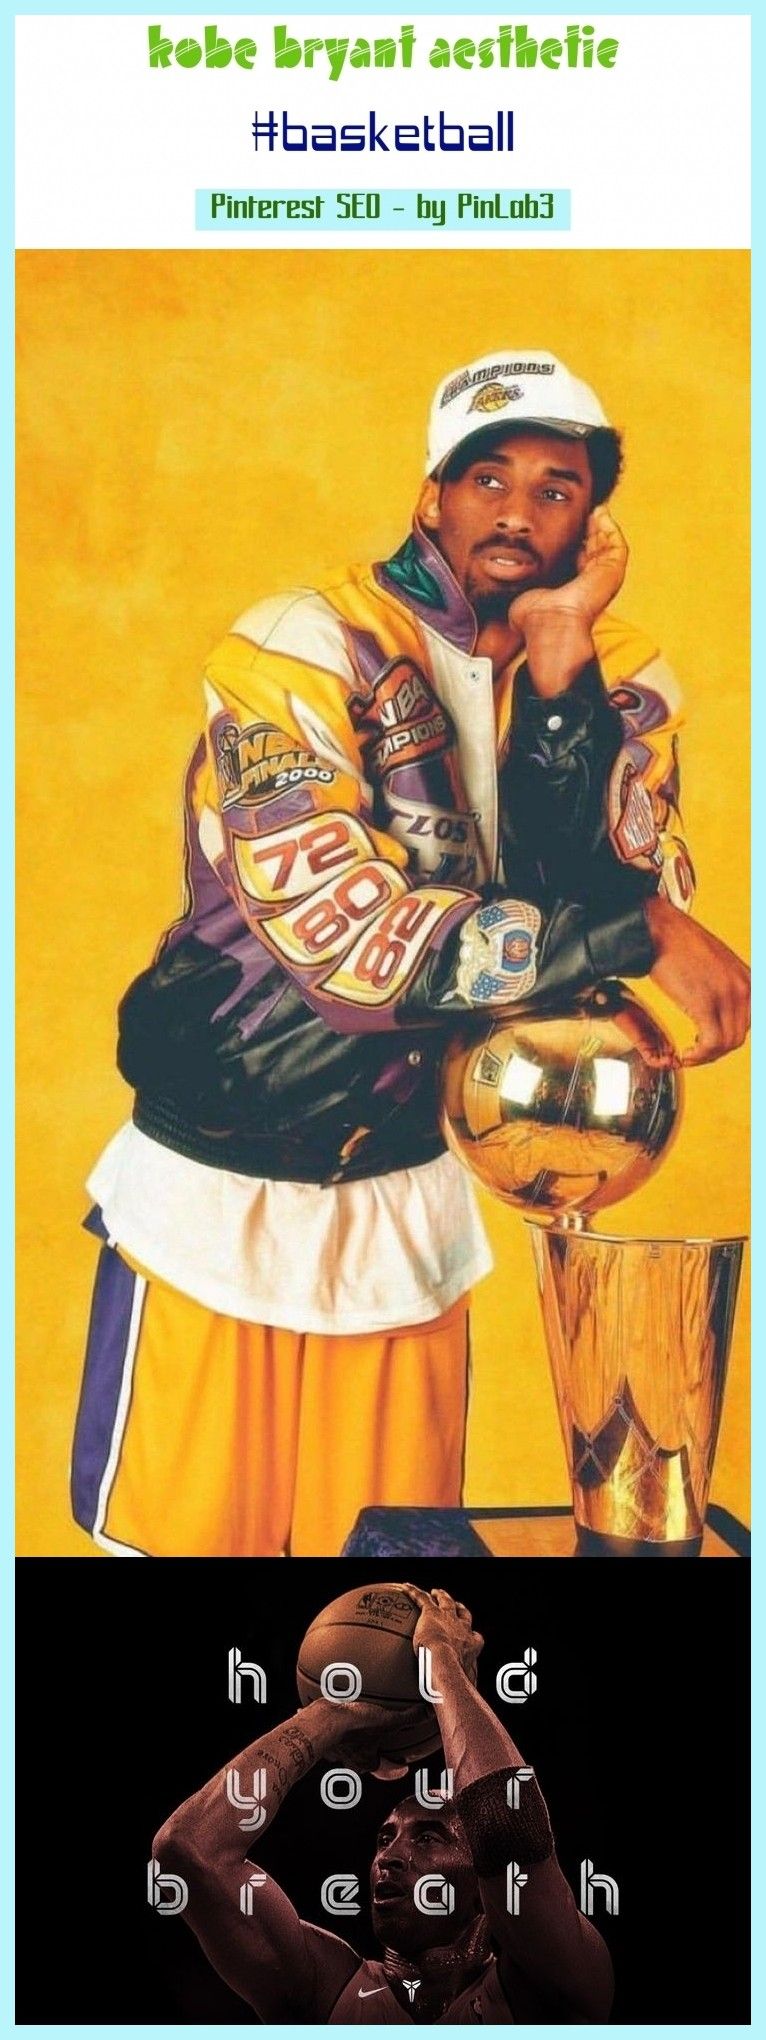 Kobe bryant aesthetic #basketball #trending. kobe bryant